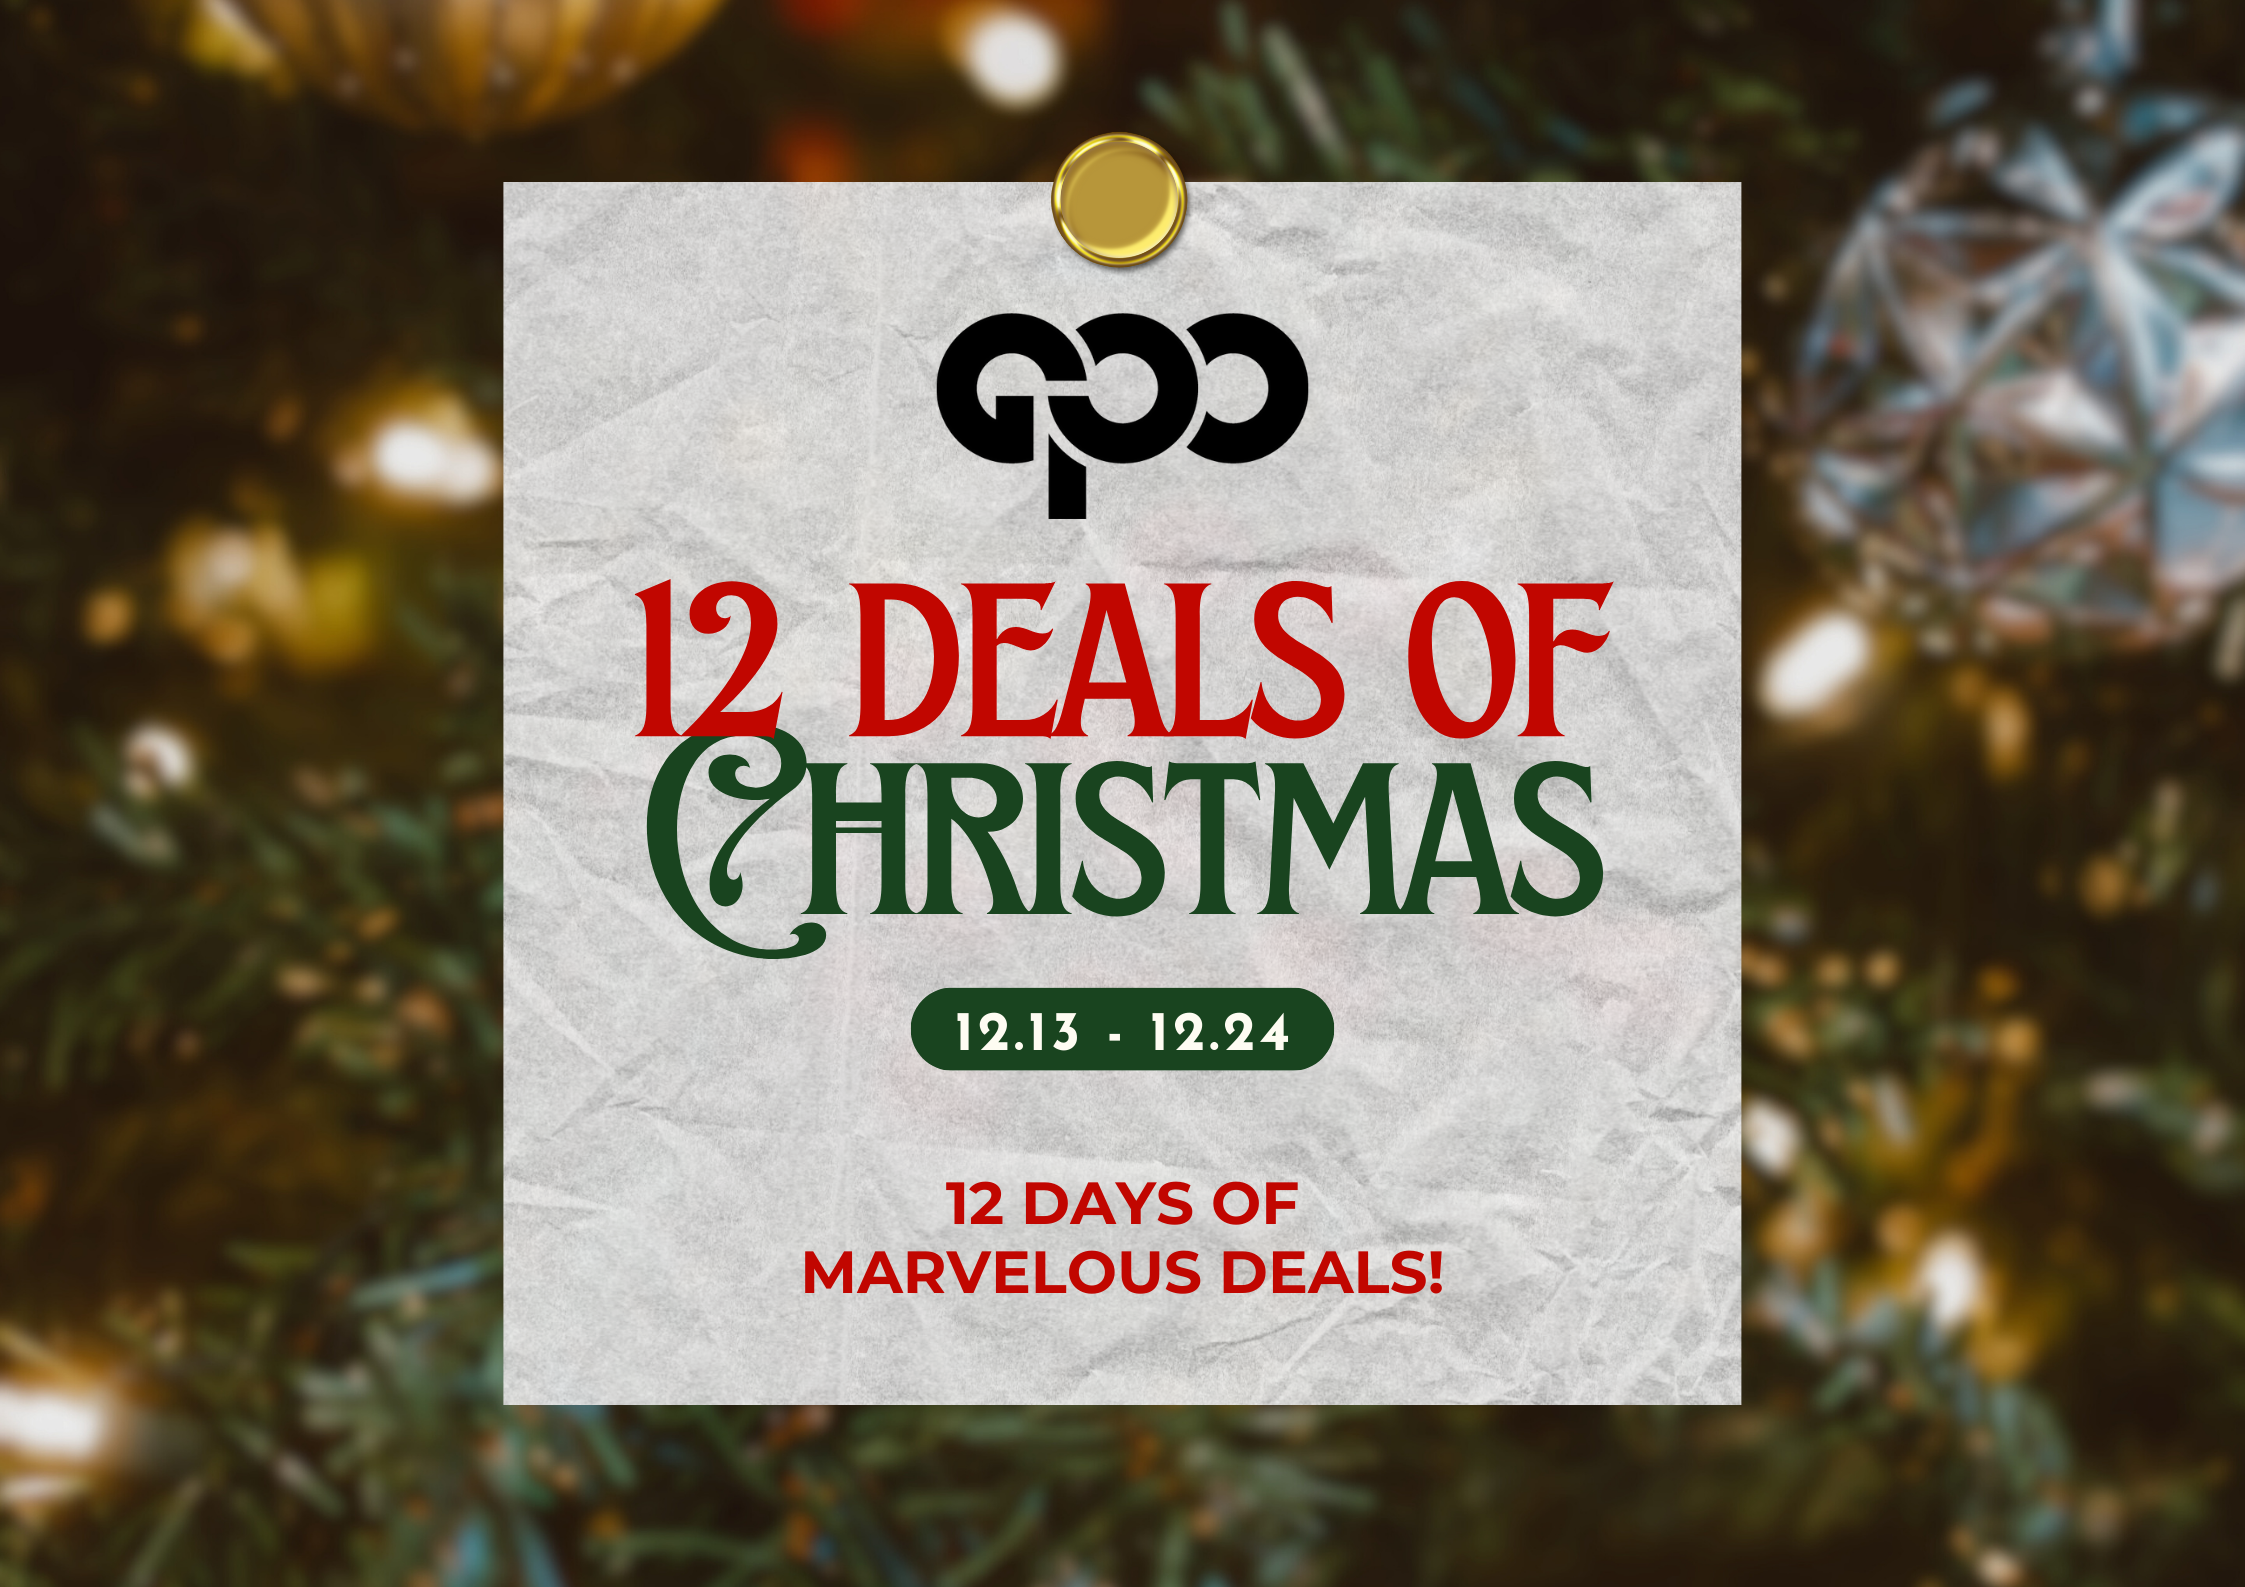 12 Deals of Christmas (December 15): Steve Madden